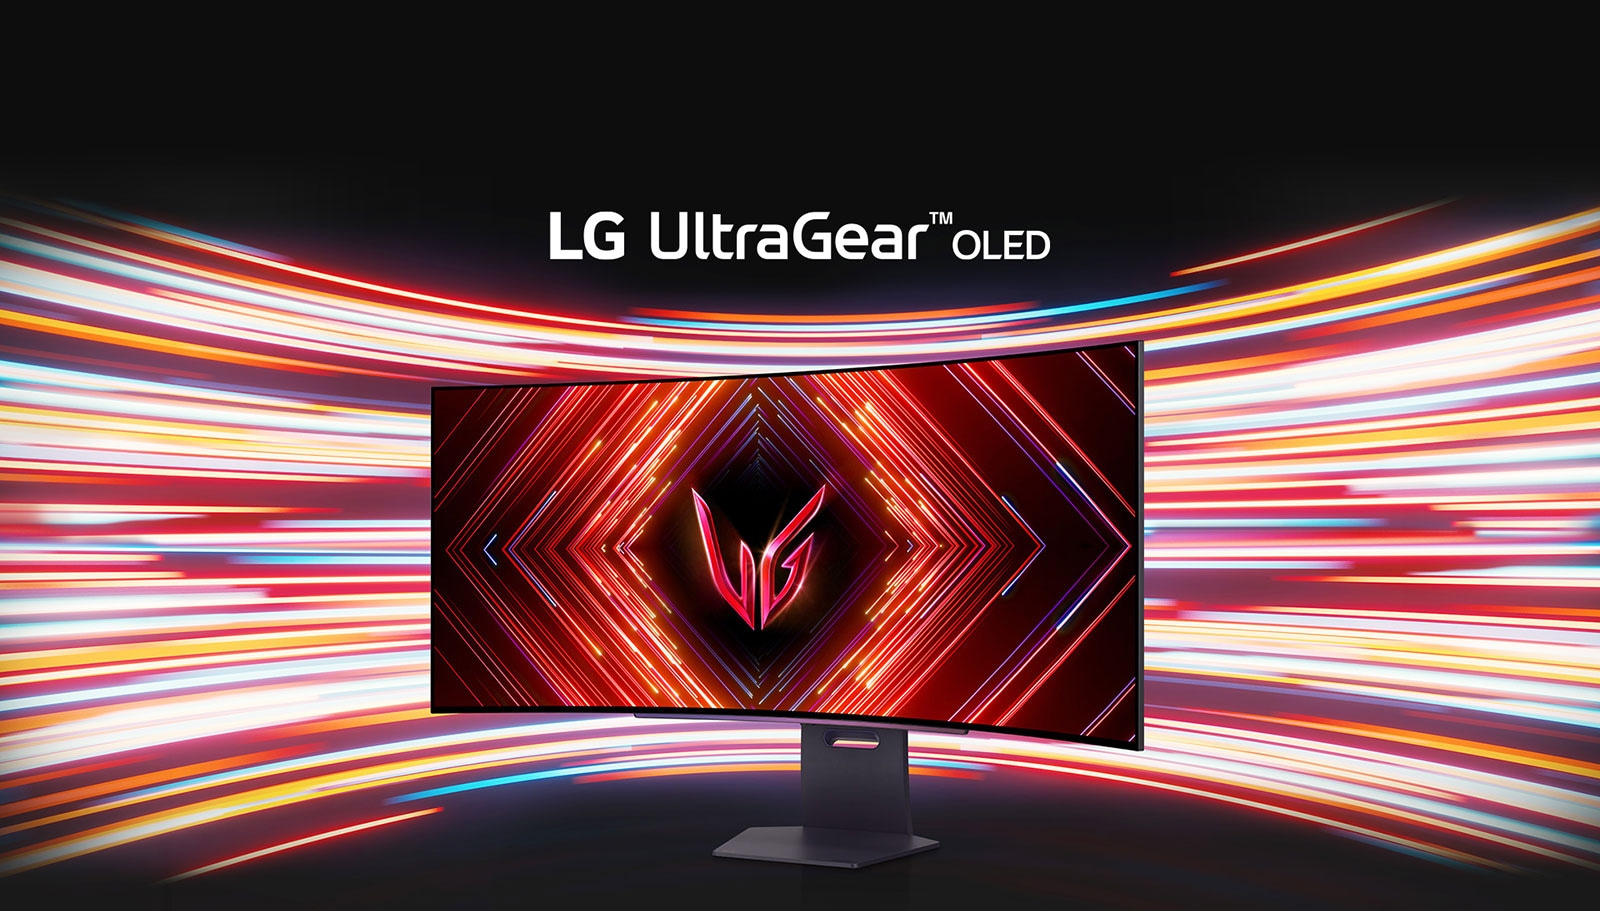 UltraGear™ OLED gaming monitor.